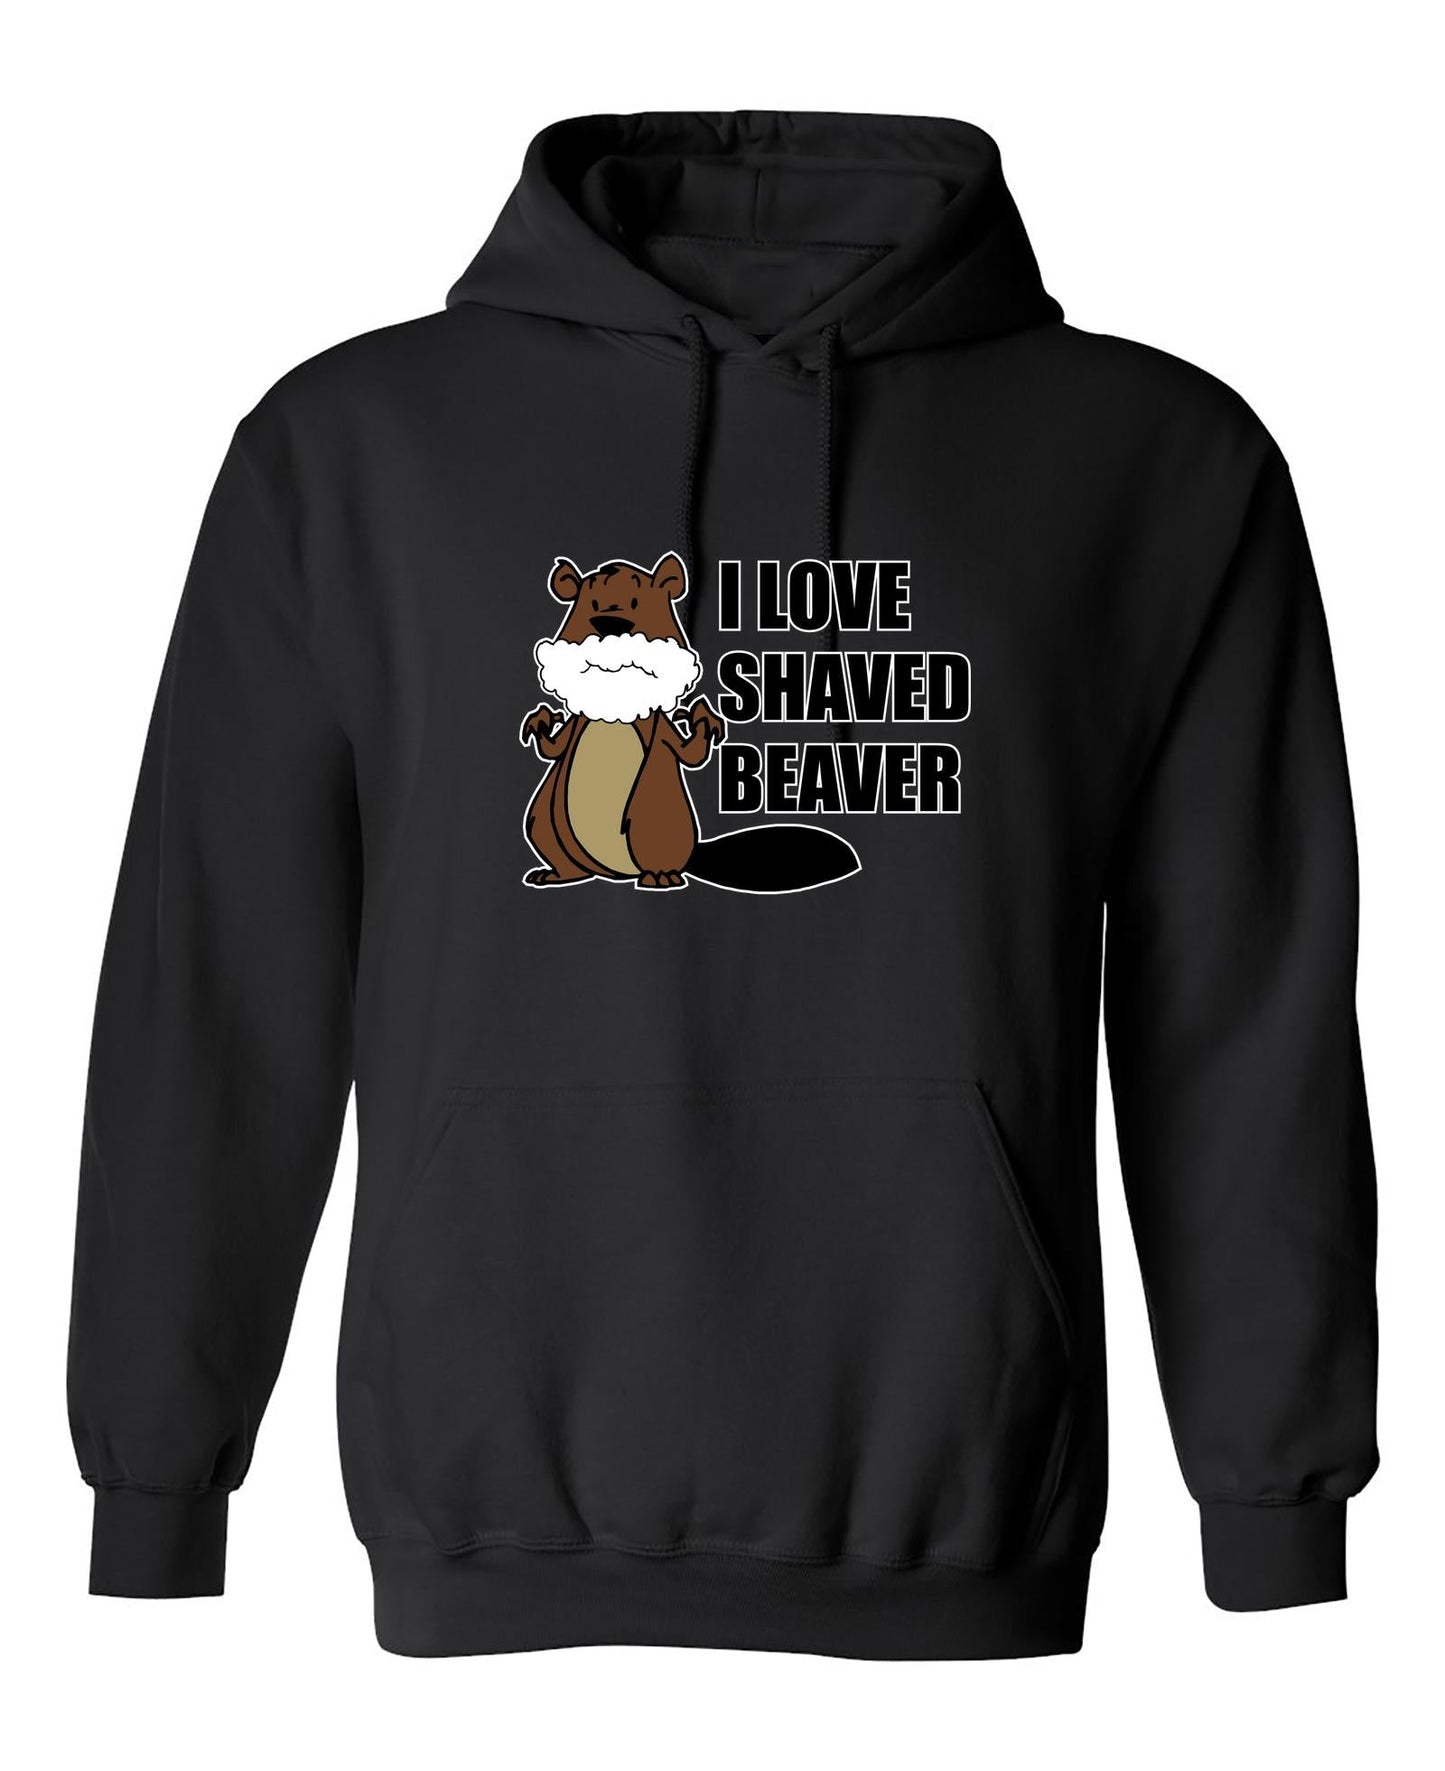 Funny T-Shirts design "I Love Shaved Beaver"